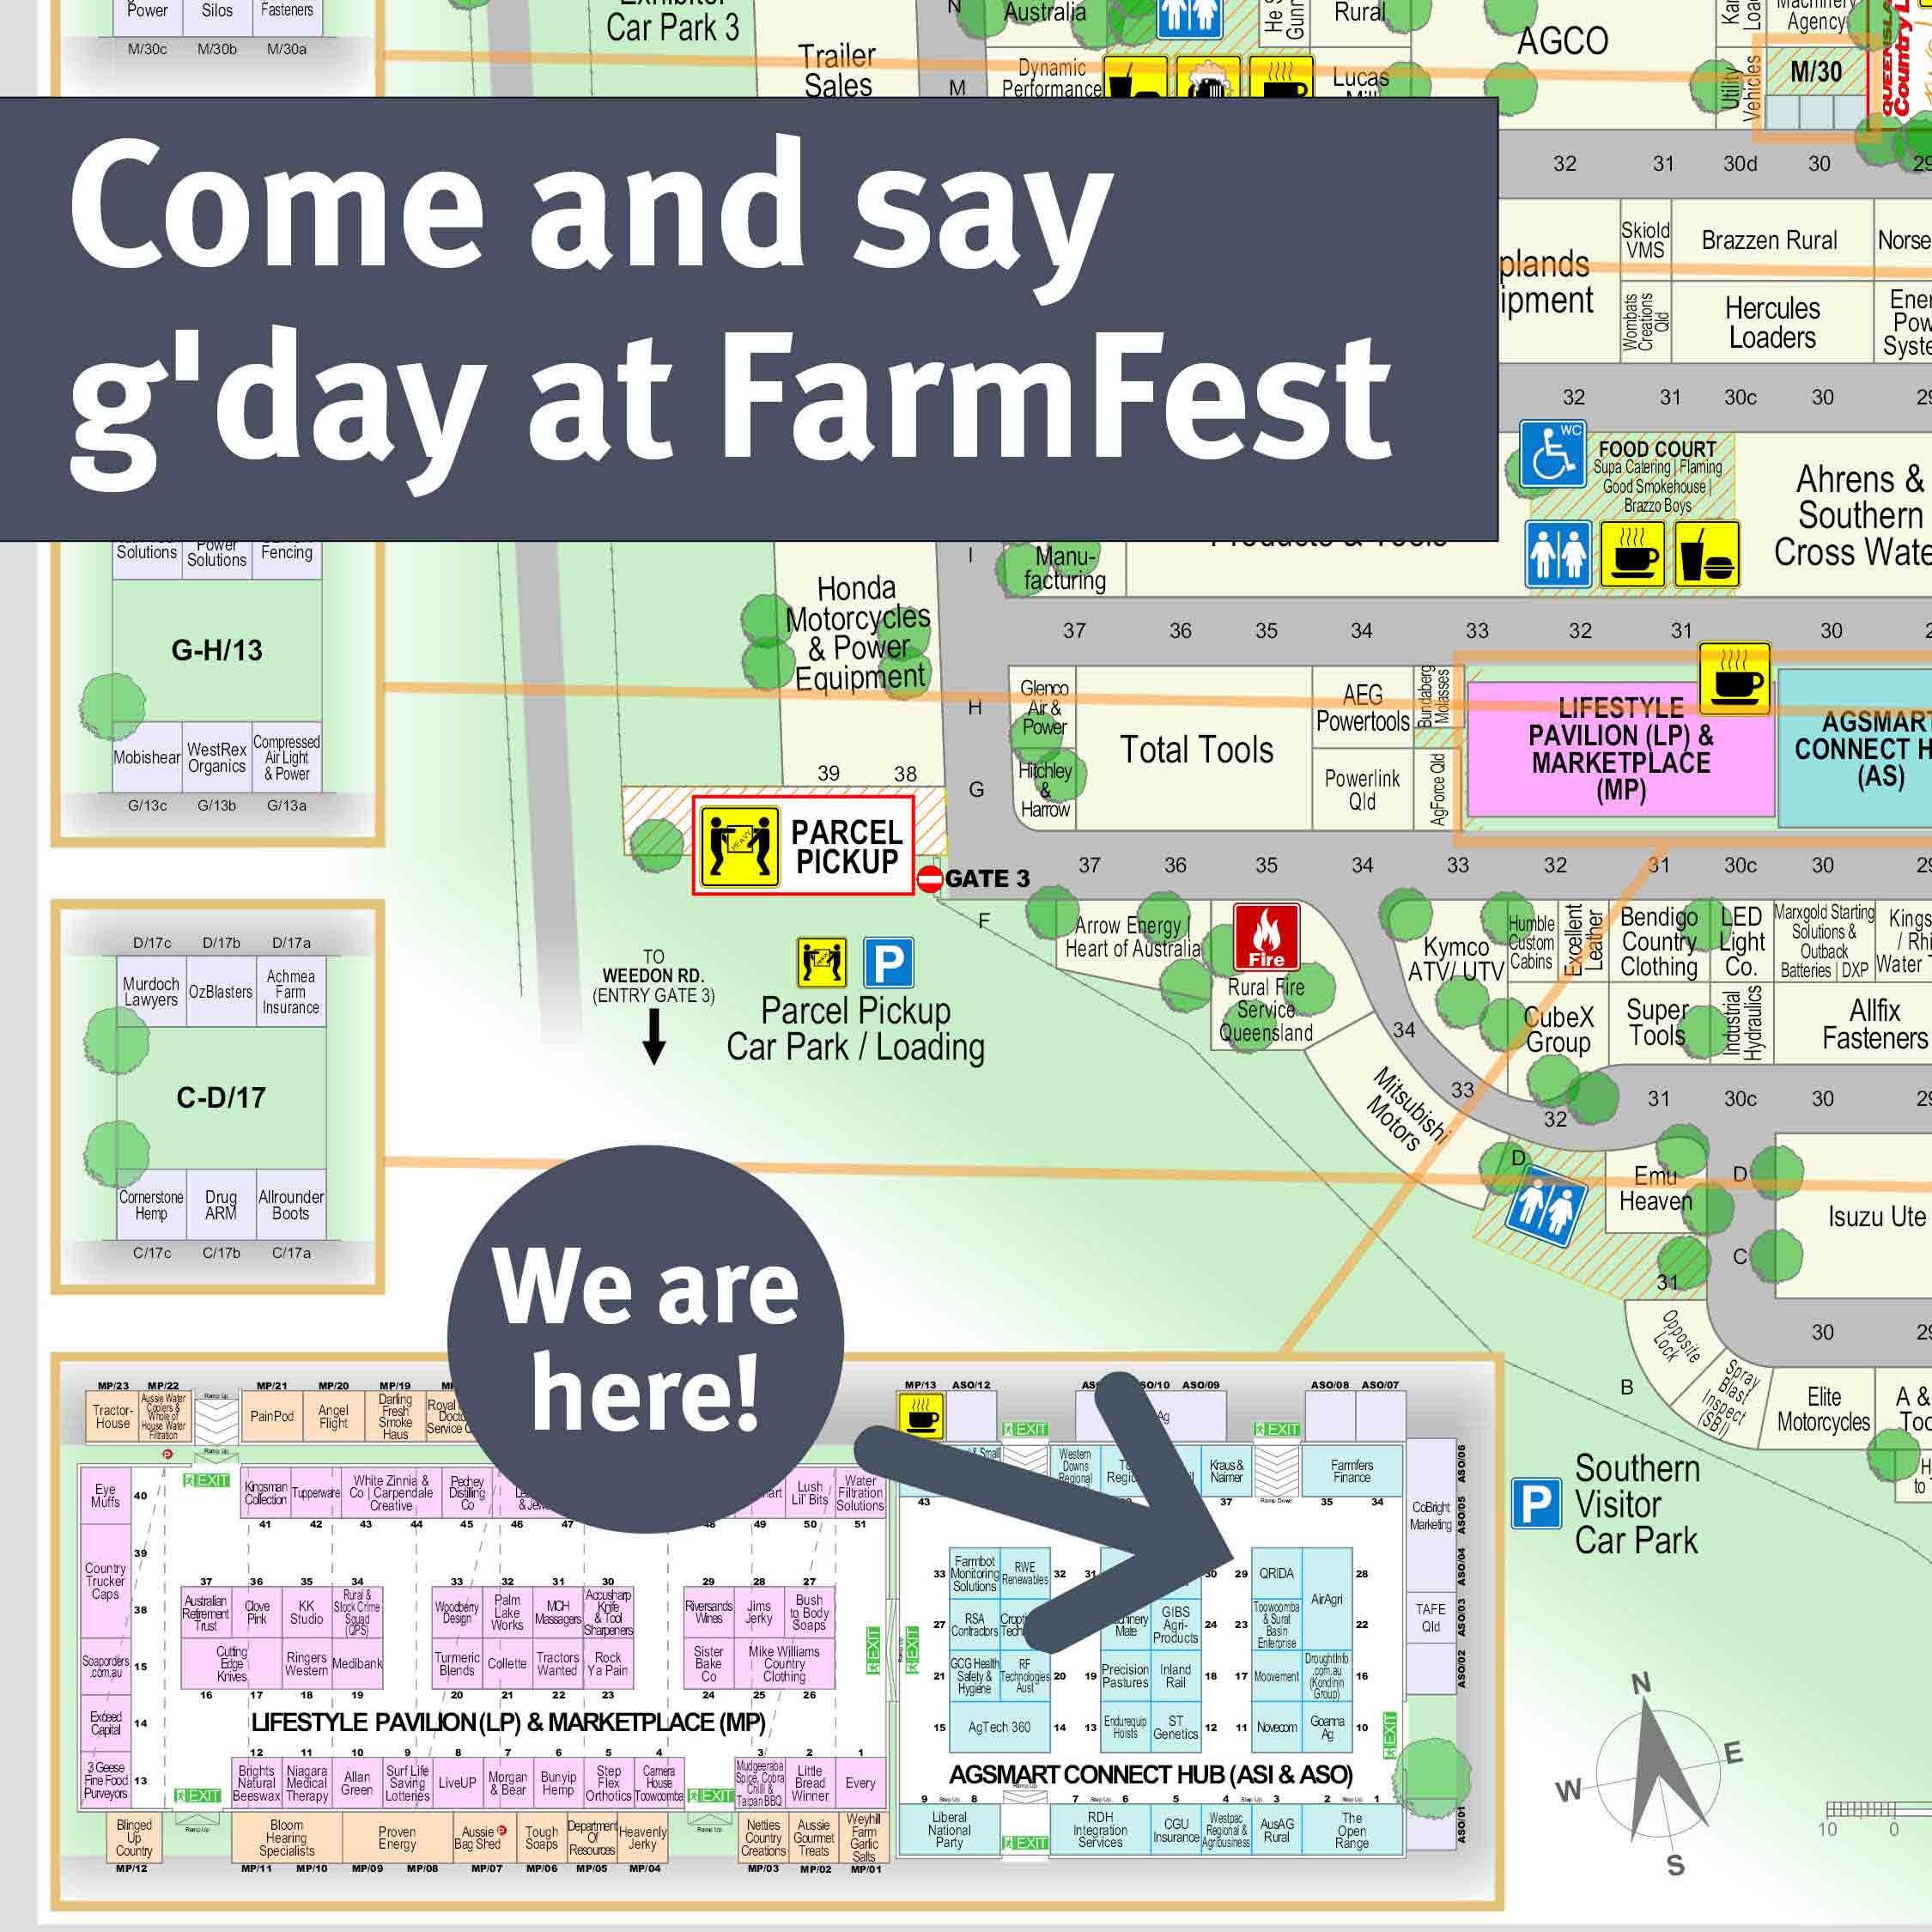 Find QRIDA at FarmFest at Pavilion 29 inside the AgSmart Connect Hub